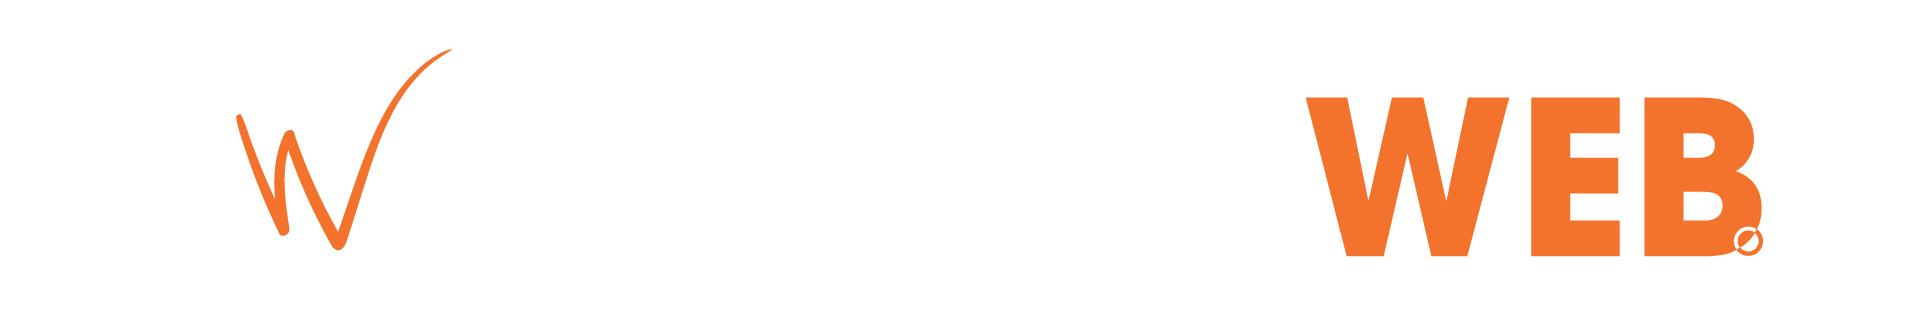 logo agenceweb